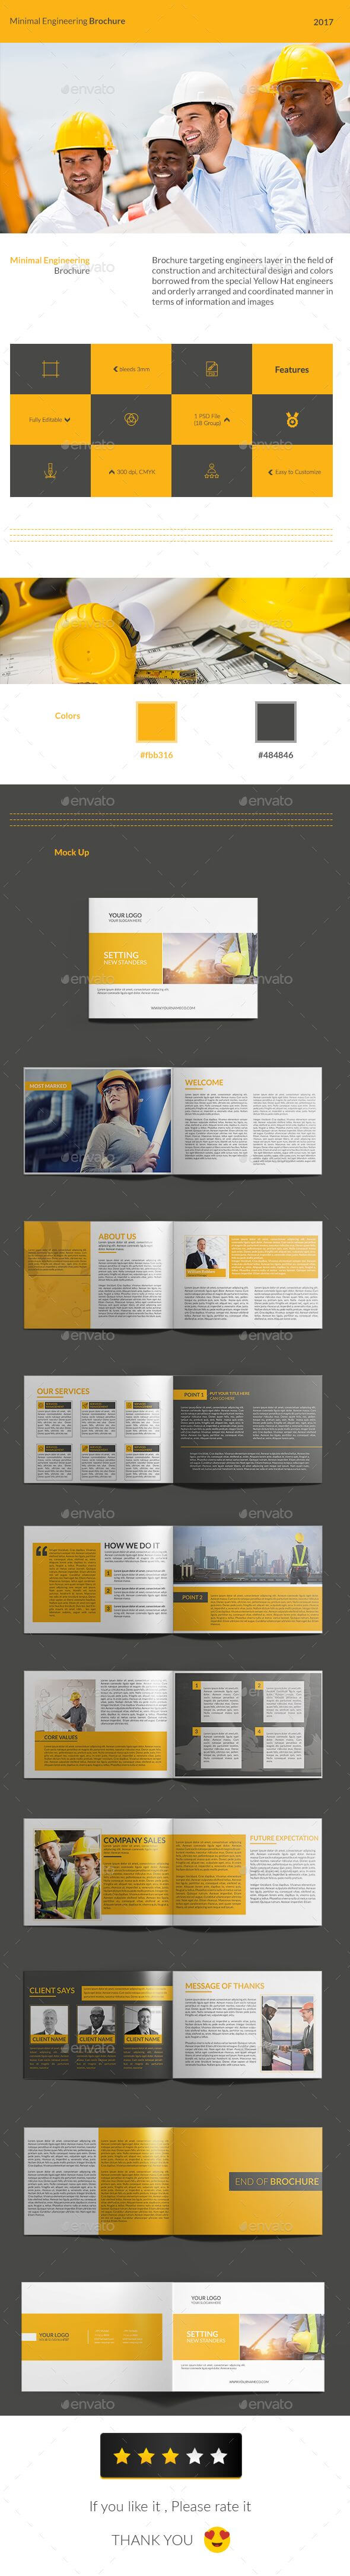 Minimal Engineering Brochure | Brochure Templates | Brochure Pertaining To Engineering Brochure Templates